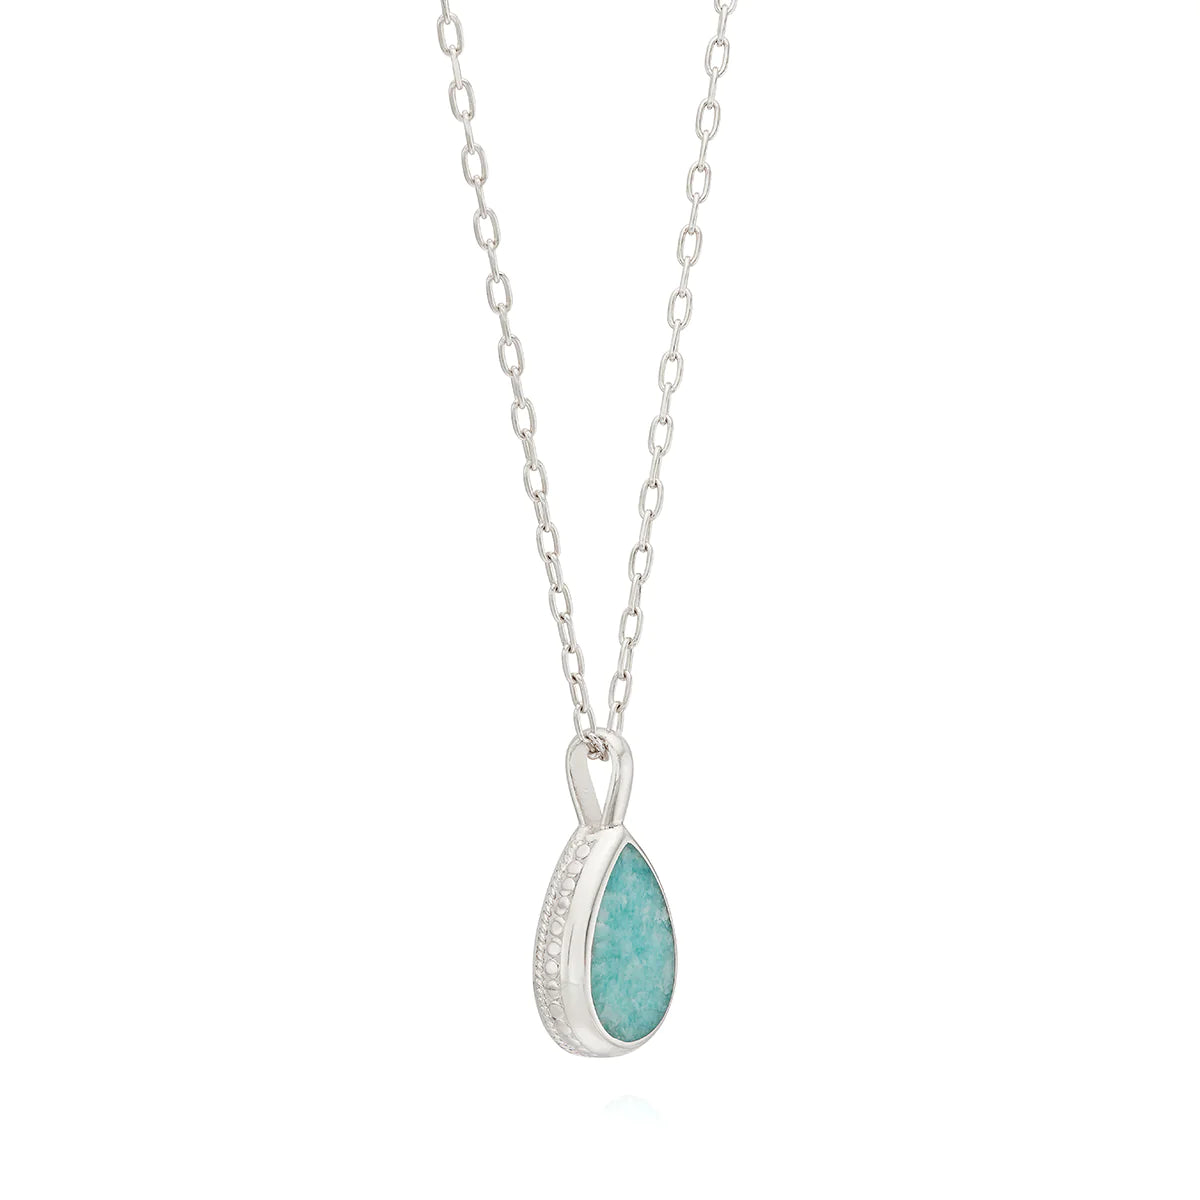 Silver teardrop pendant Amazonite pendant necklaceSilver and Amazonite teardrop pendant necklace